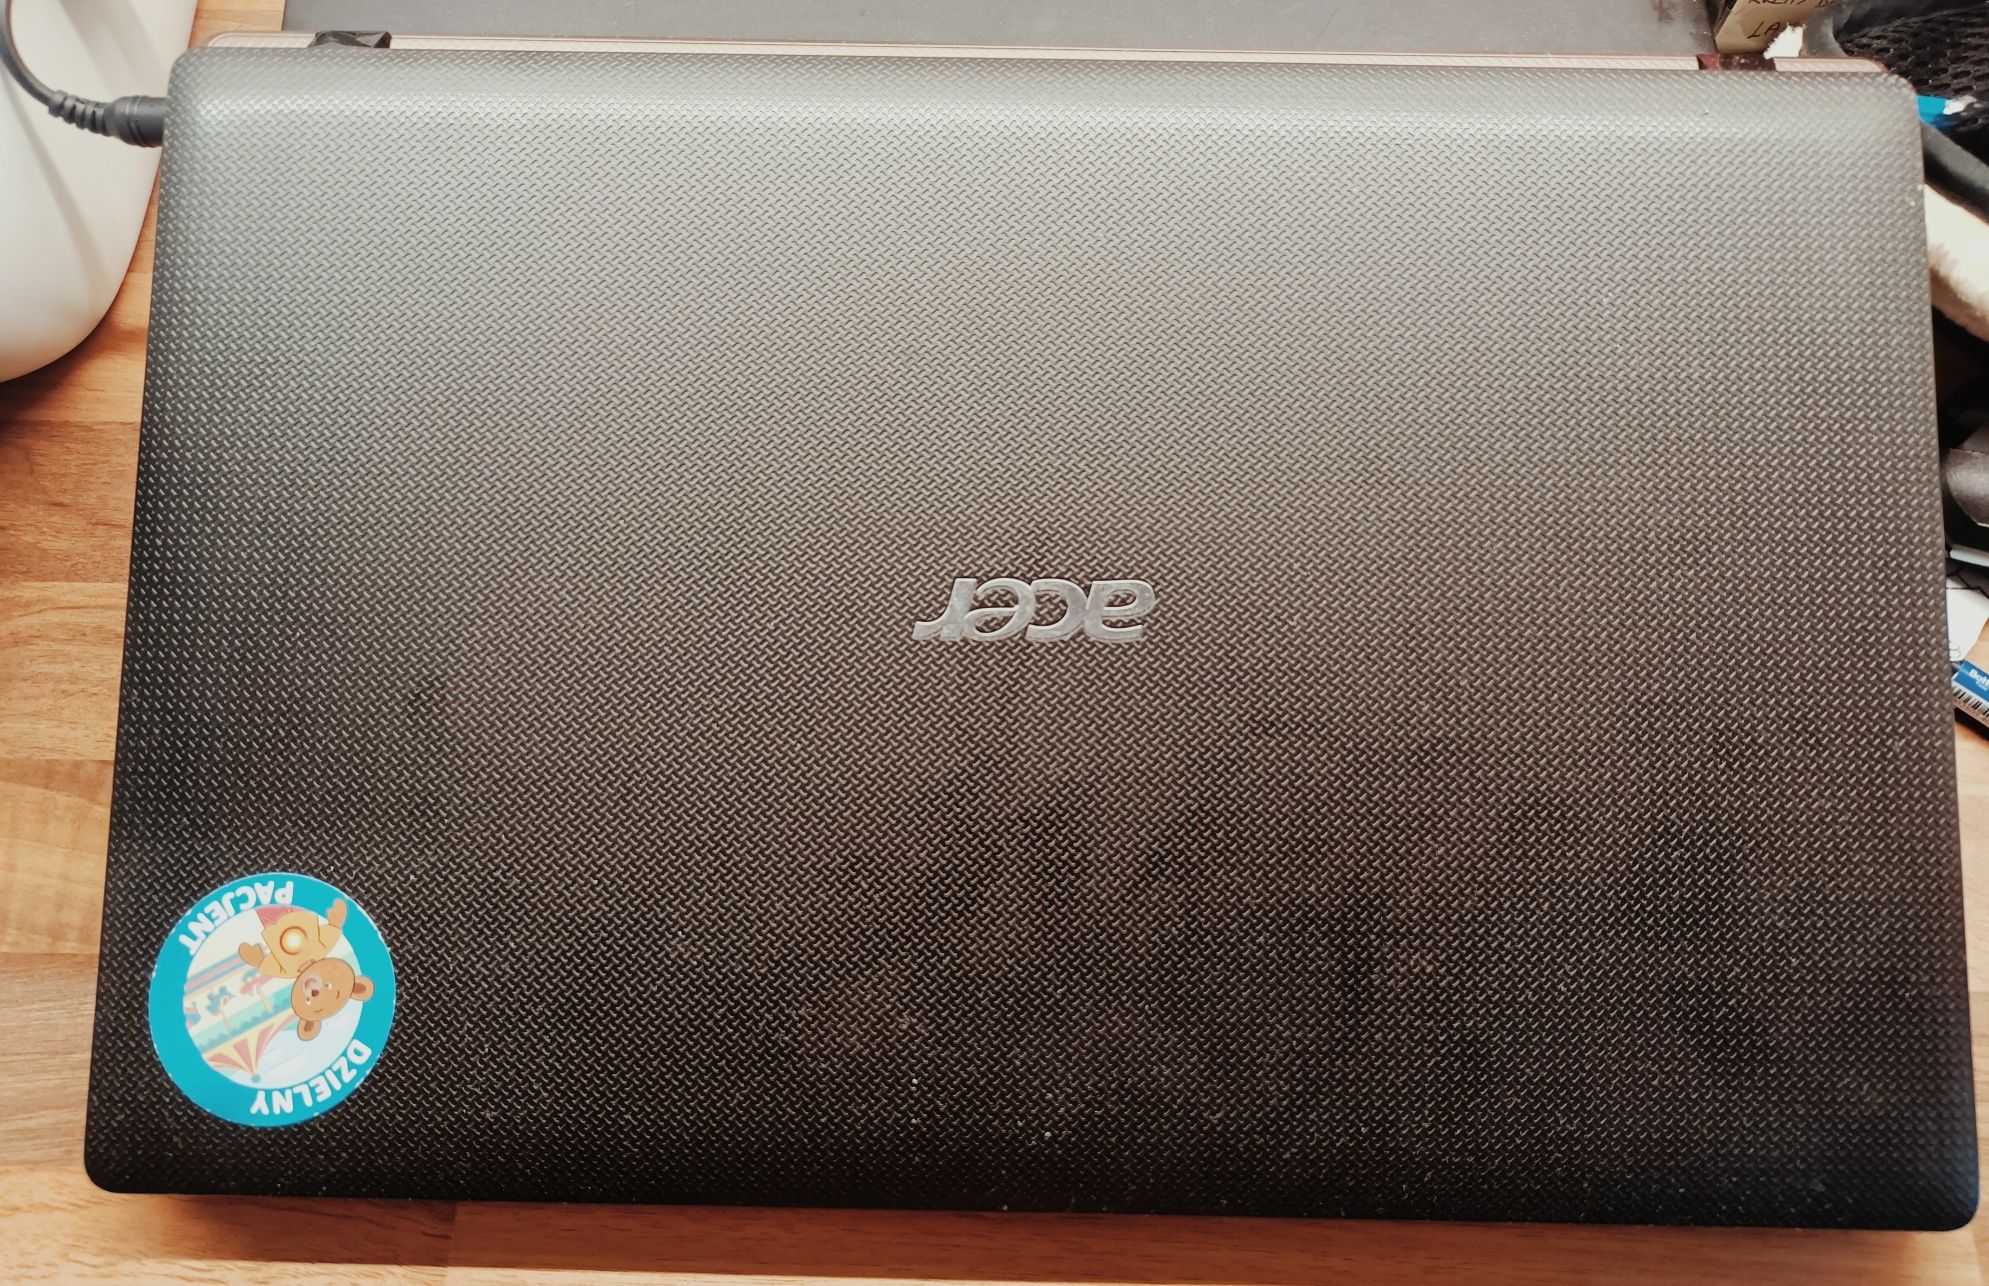 Laptop Acer aspire 5742 Z podrasowany  procesor i 5